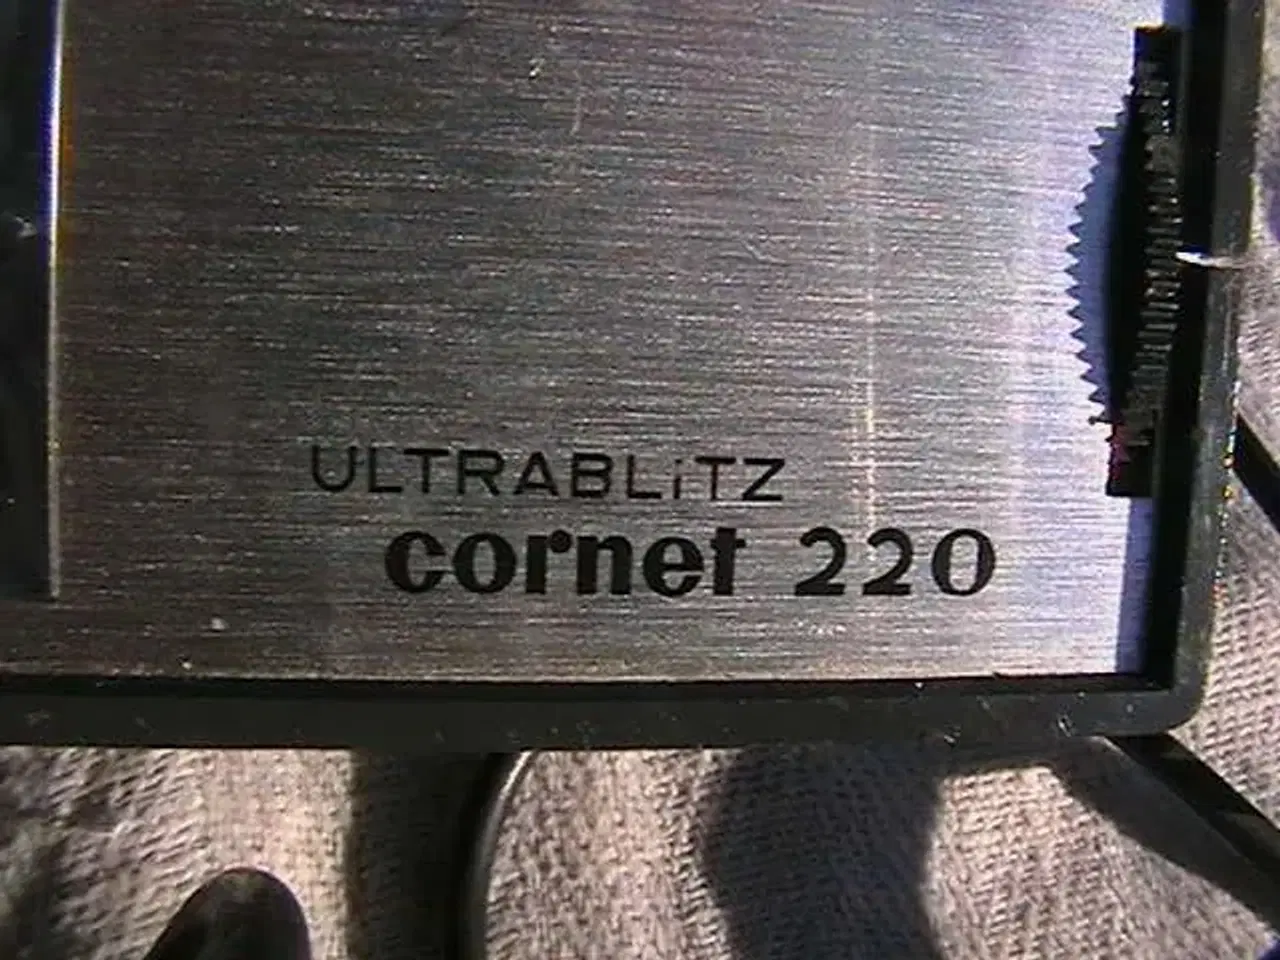 Billede 2 - Blitz Mrk: Cornet 220. Ultrablitz.